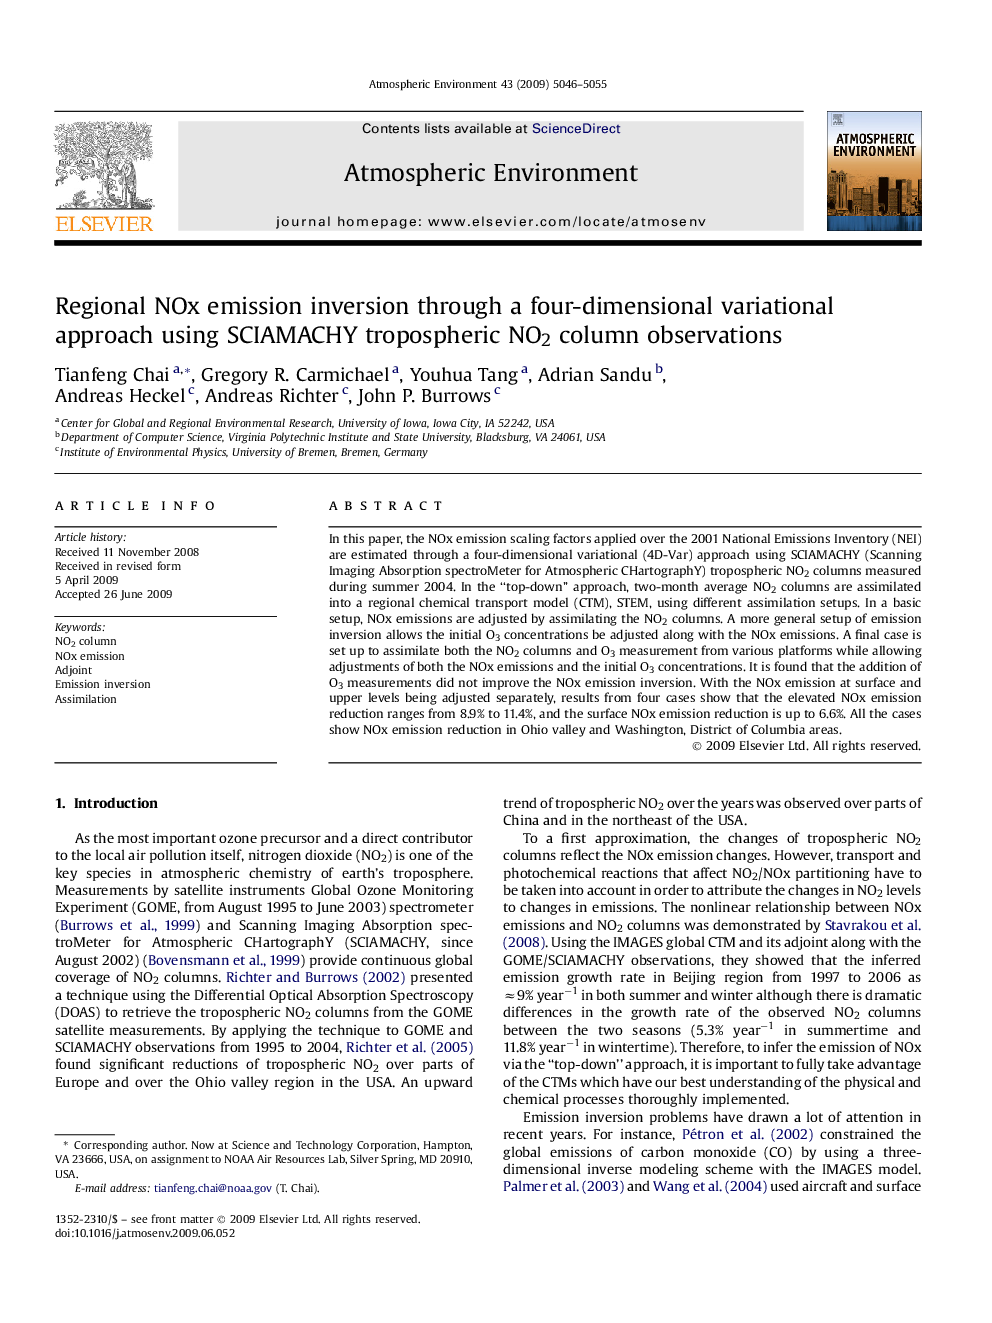 Regional NOx emission inversion through a four-dimensional variational approach using SCIAMACHY tropospheric NO2 column observations